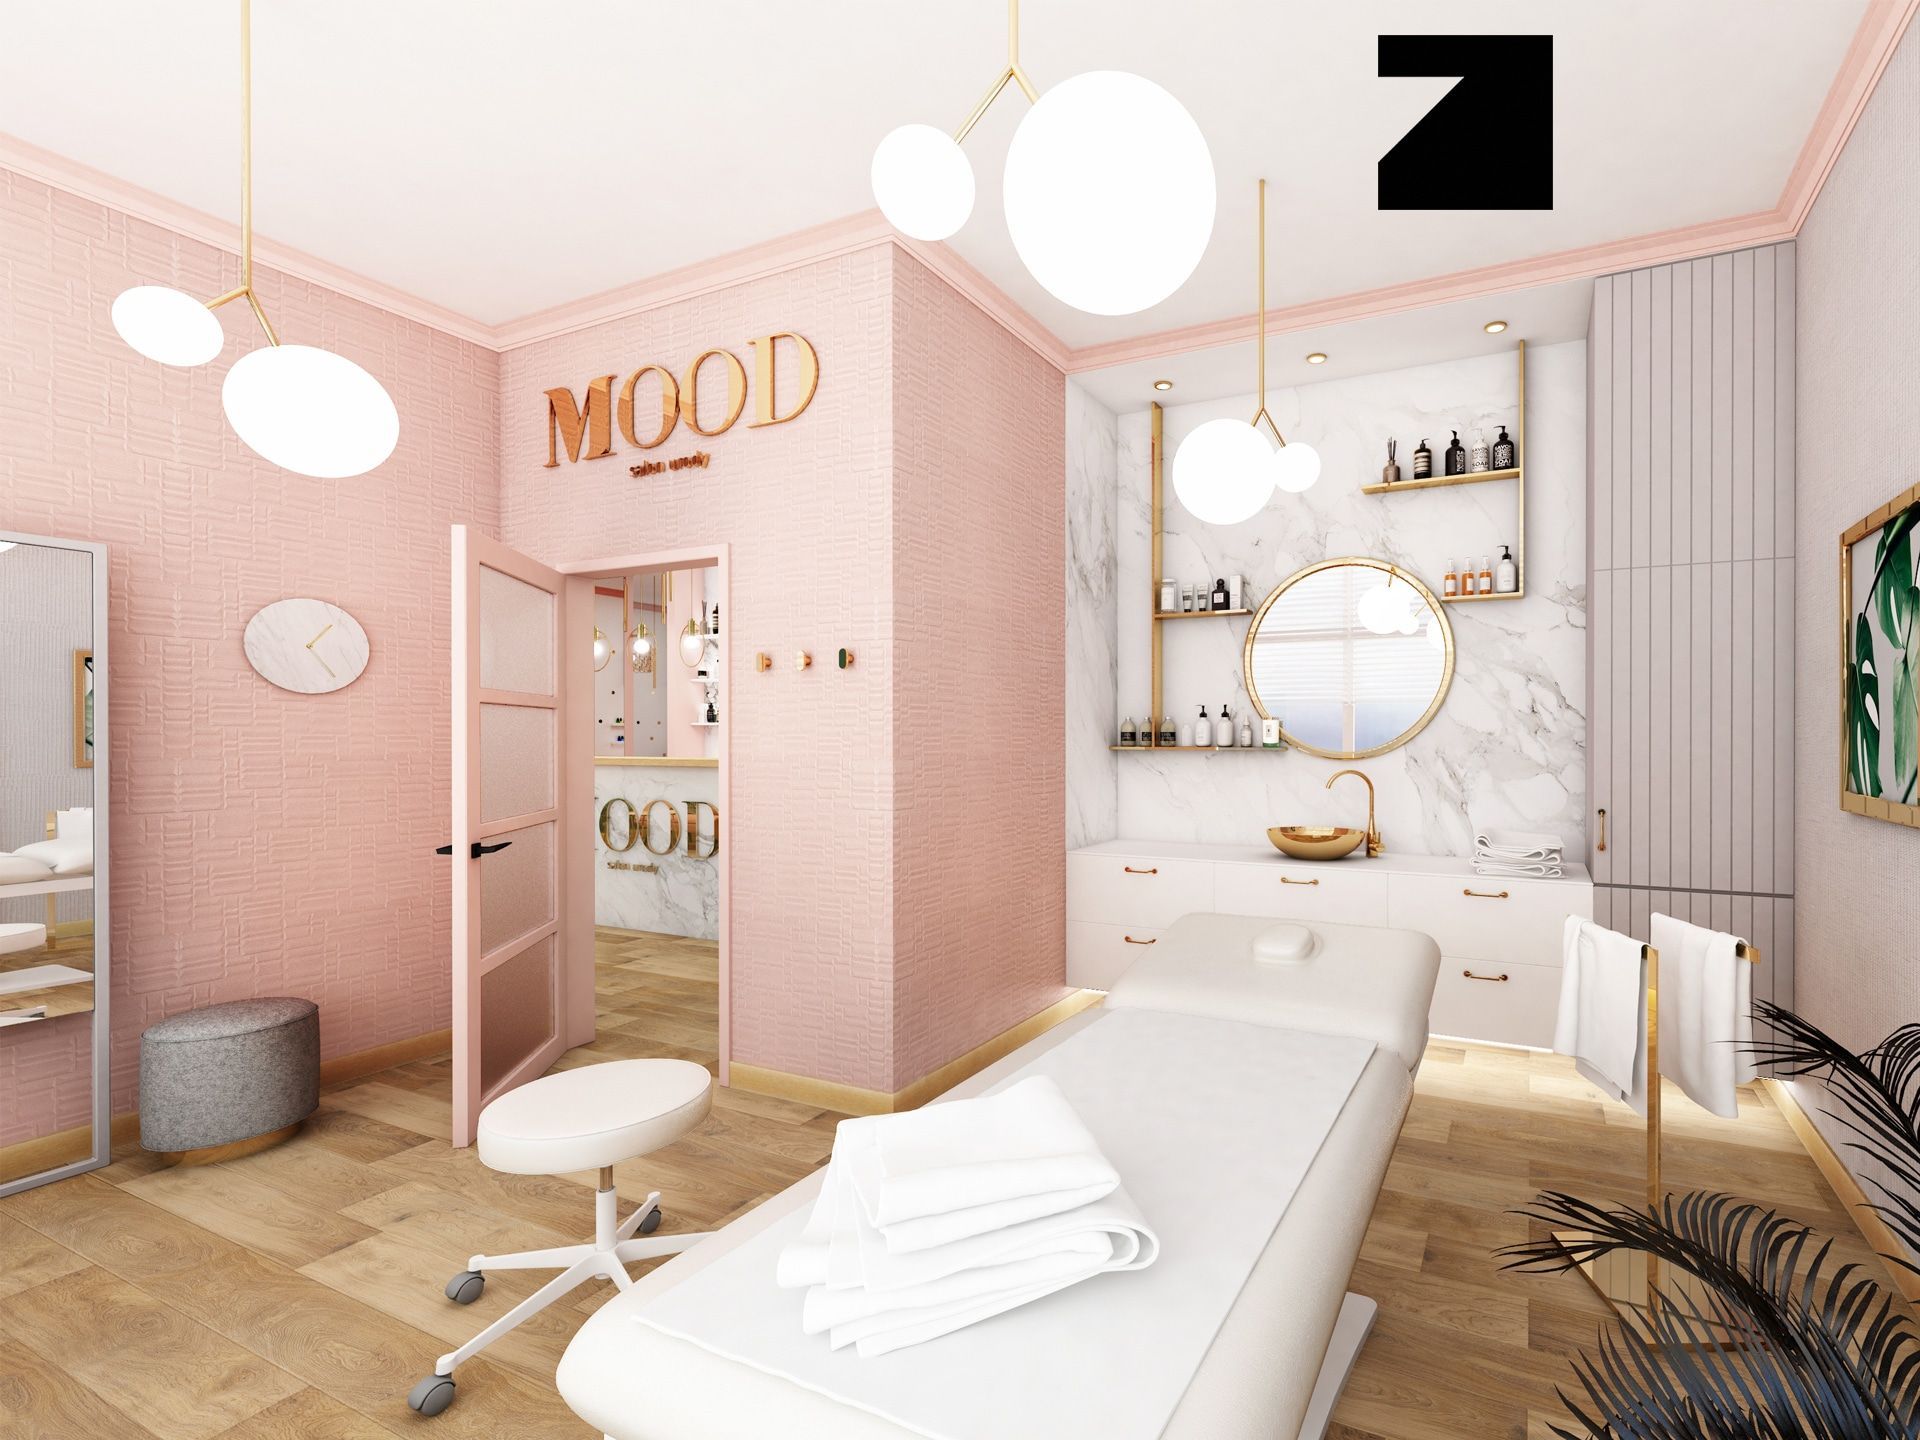 BEAUTY SALON MOOD - Lesinska Concept - Premium Design Studio - BEAUTY SALON MOOD - Lesinska Concept - Premium Design Studio -   17 beauty salon ideas